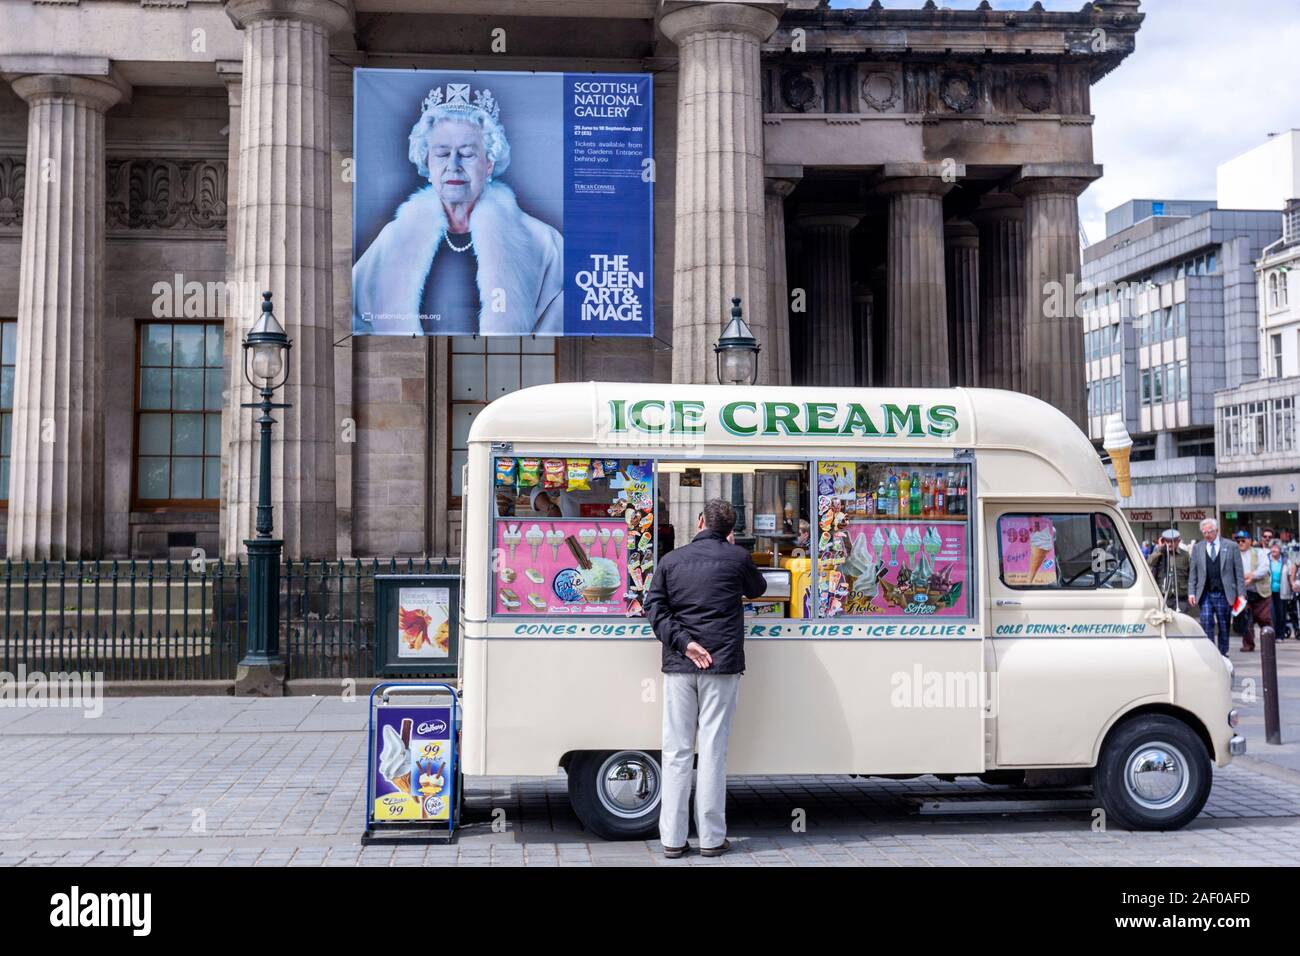 Ice Cream van delante de la Royal Scottish Academy La Reina: Arte e imagen - National Portrait Gallery, Edimburgo, Reino Unido Foto de stock